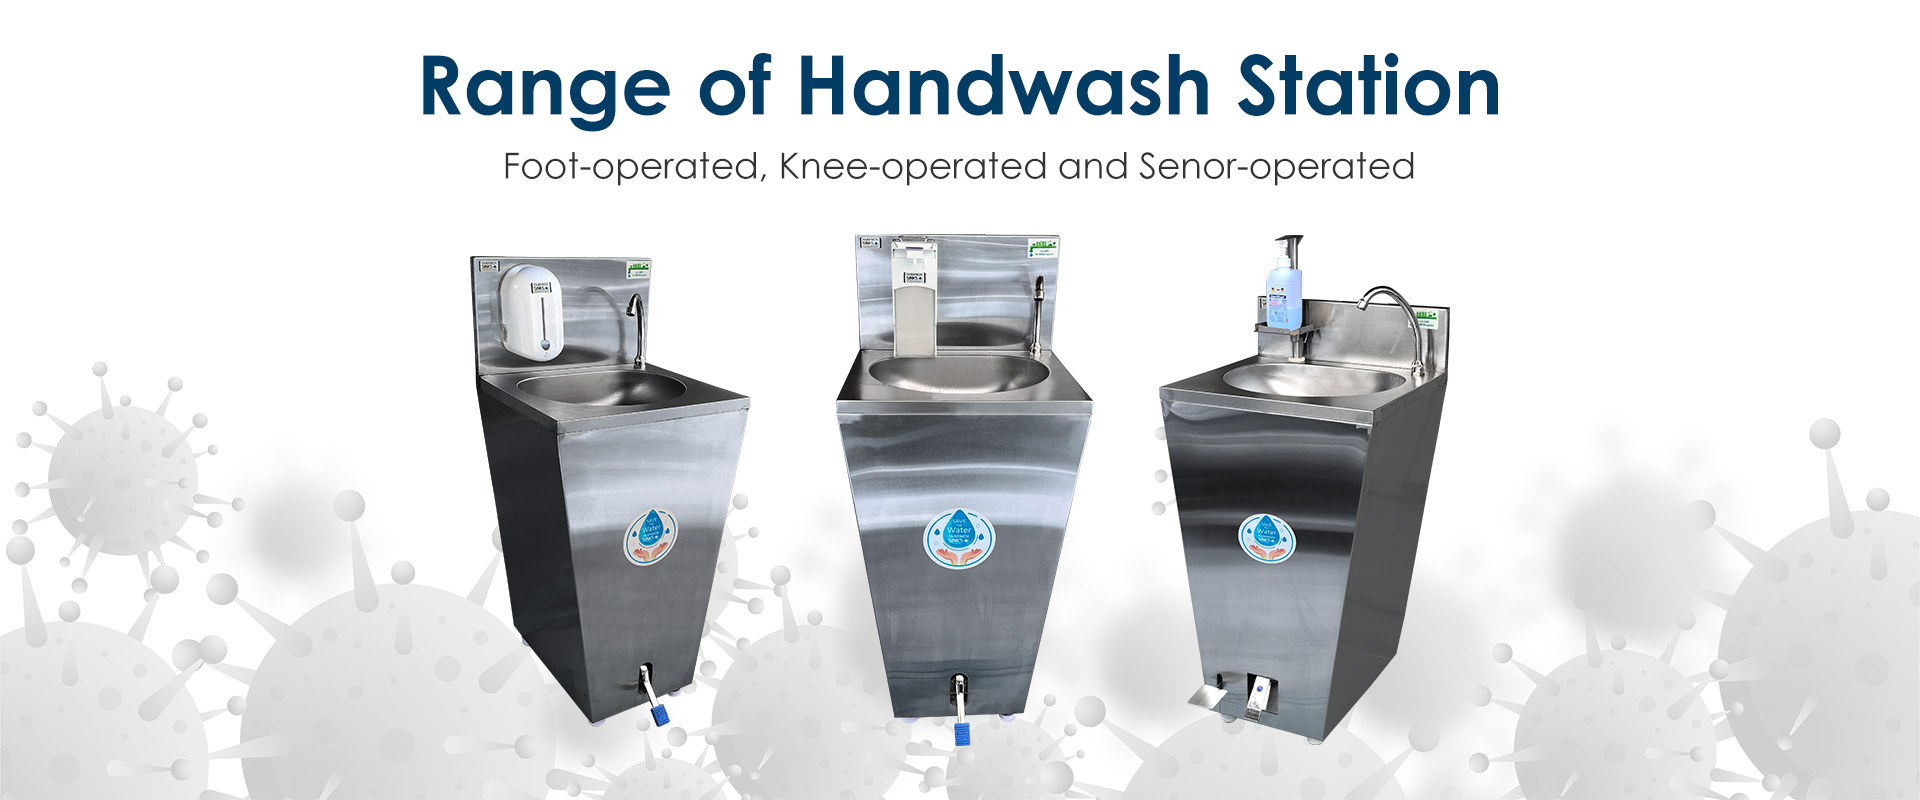 Range of Hand Wash Station by Fabrinox Sinks